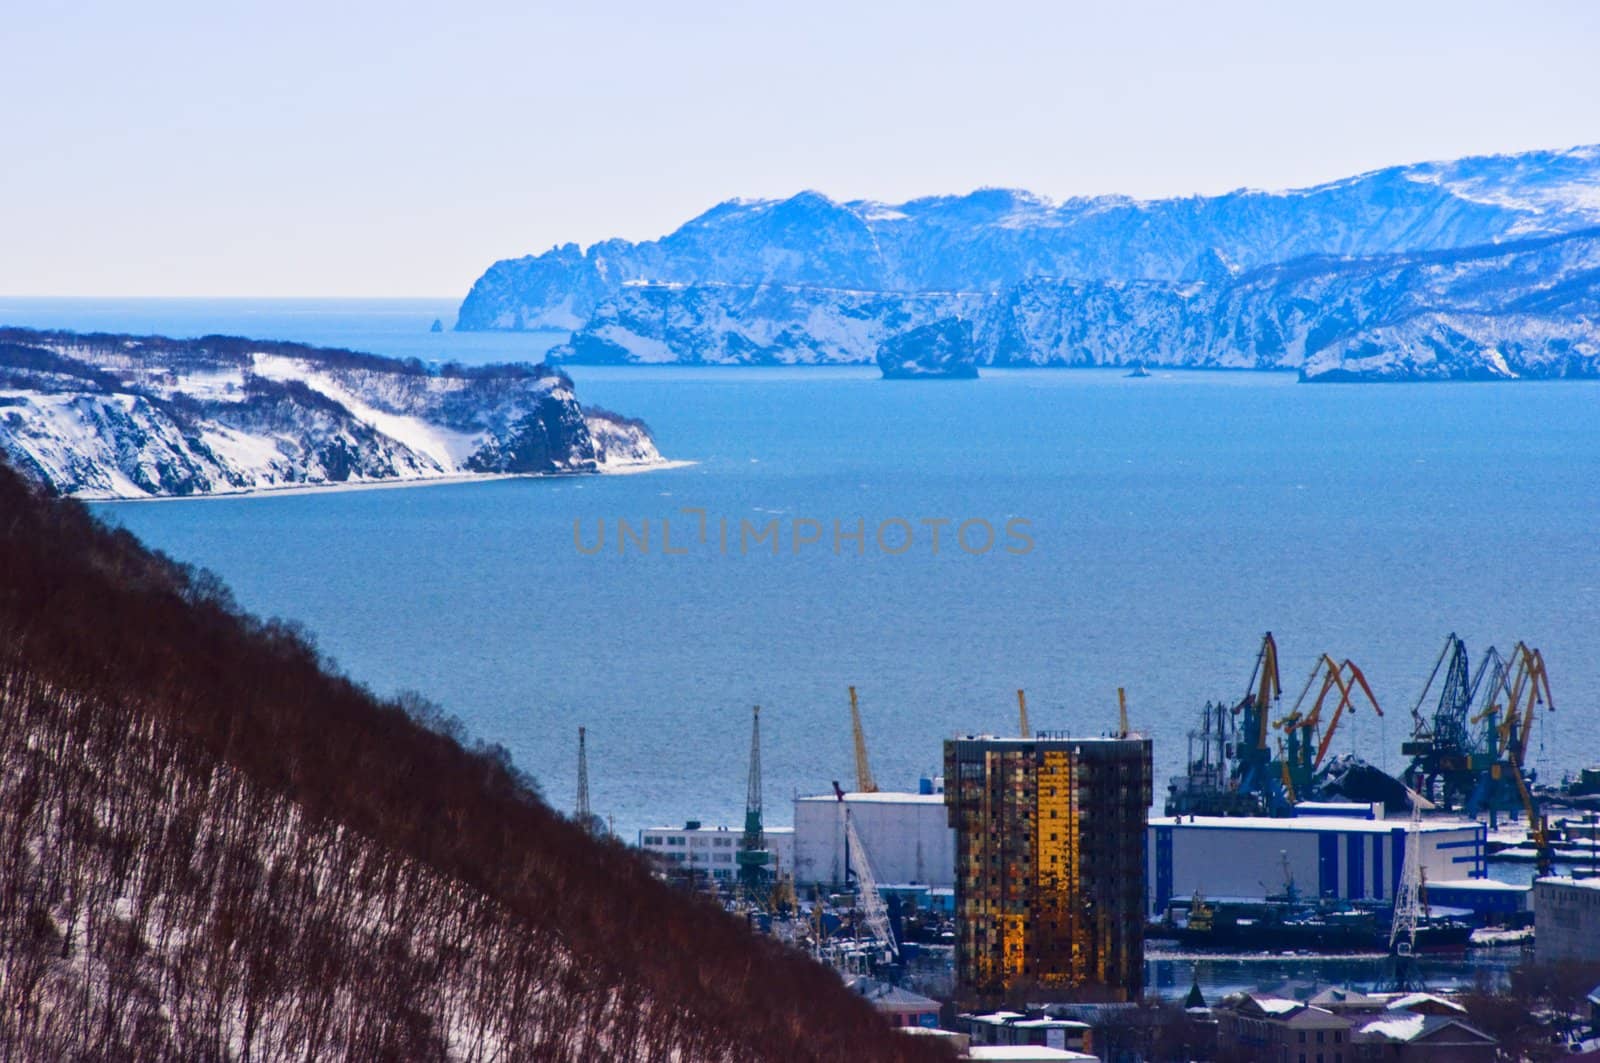 The city of Petropavlovsk - Kamchatka in Russia